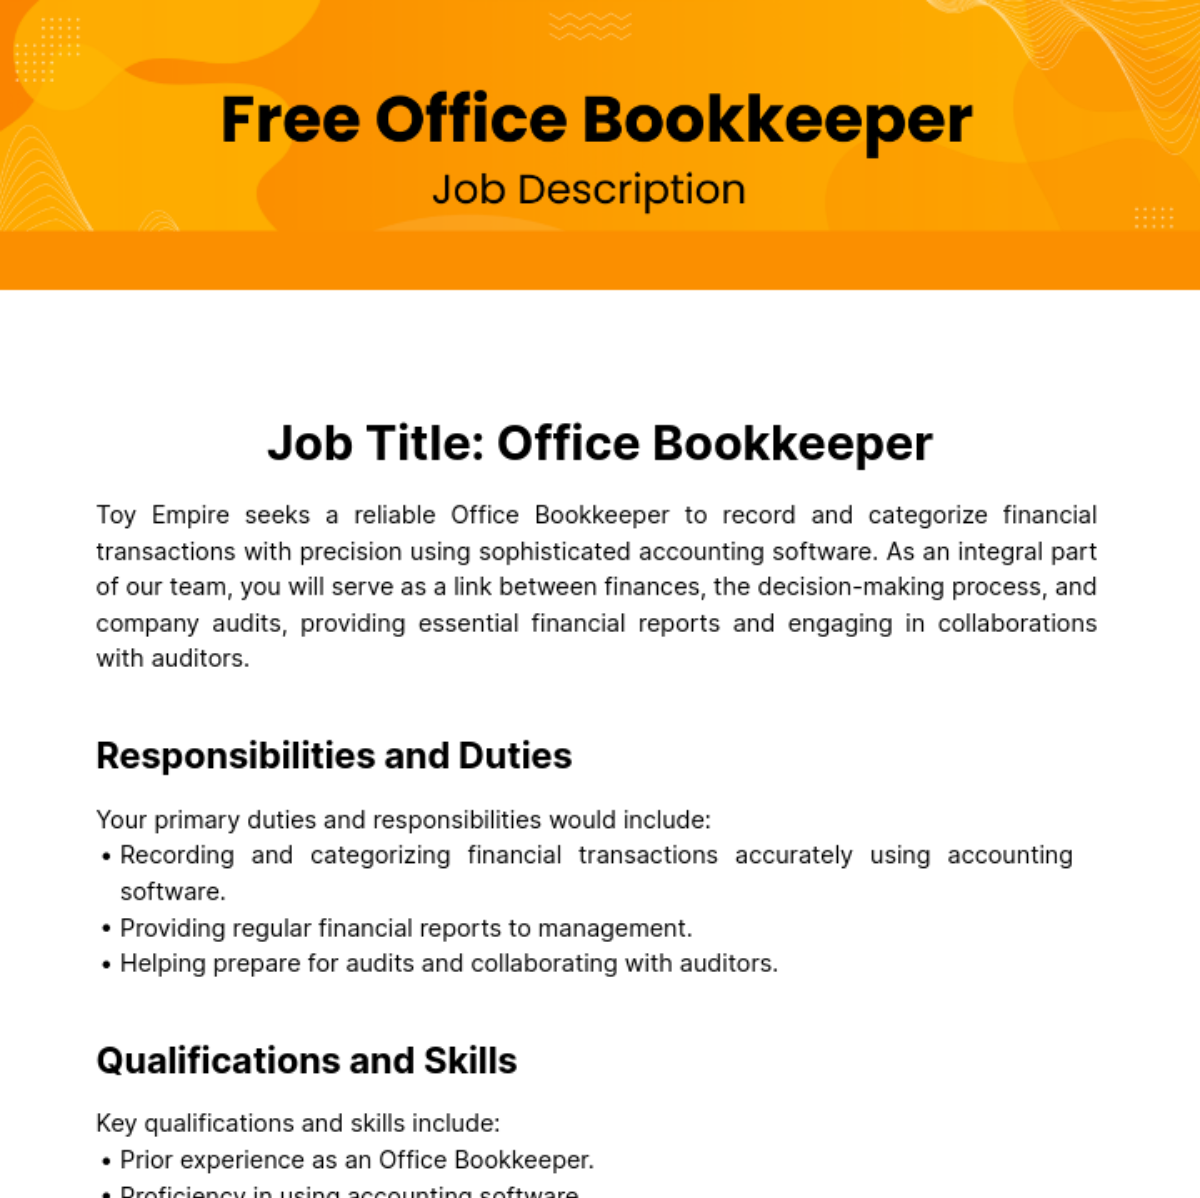 Free Office Bookkeeper Job Description Template